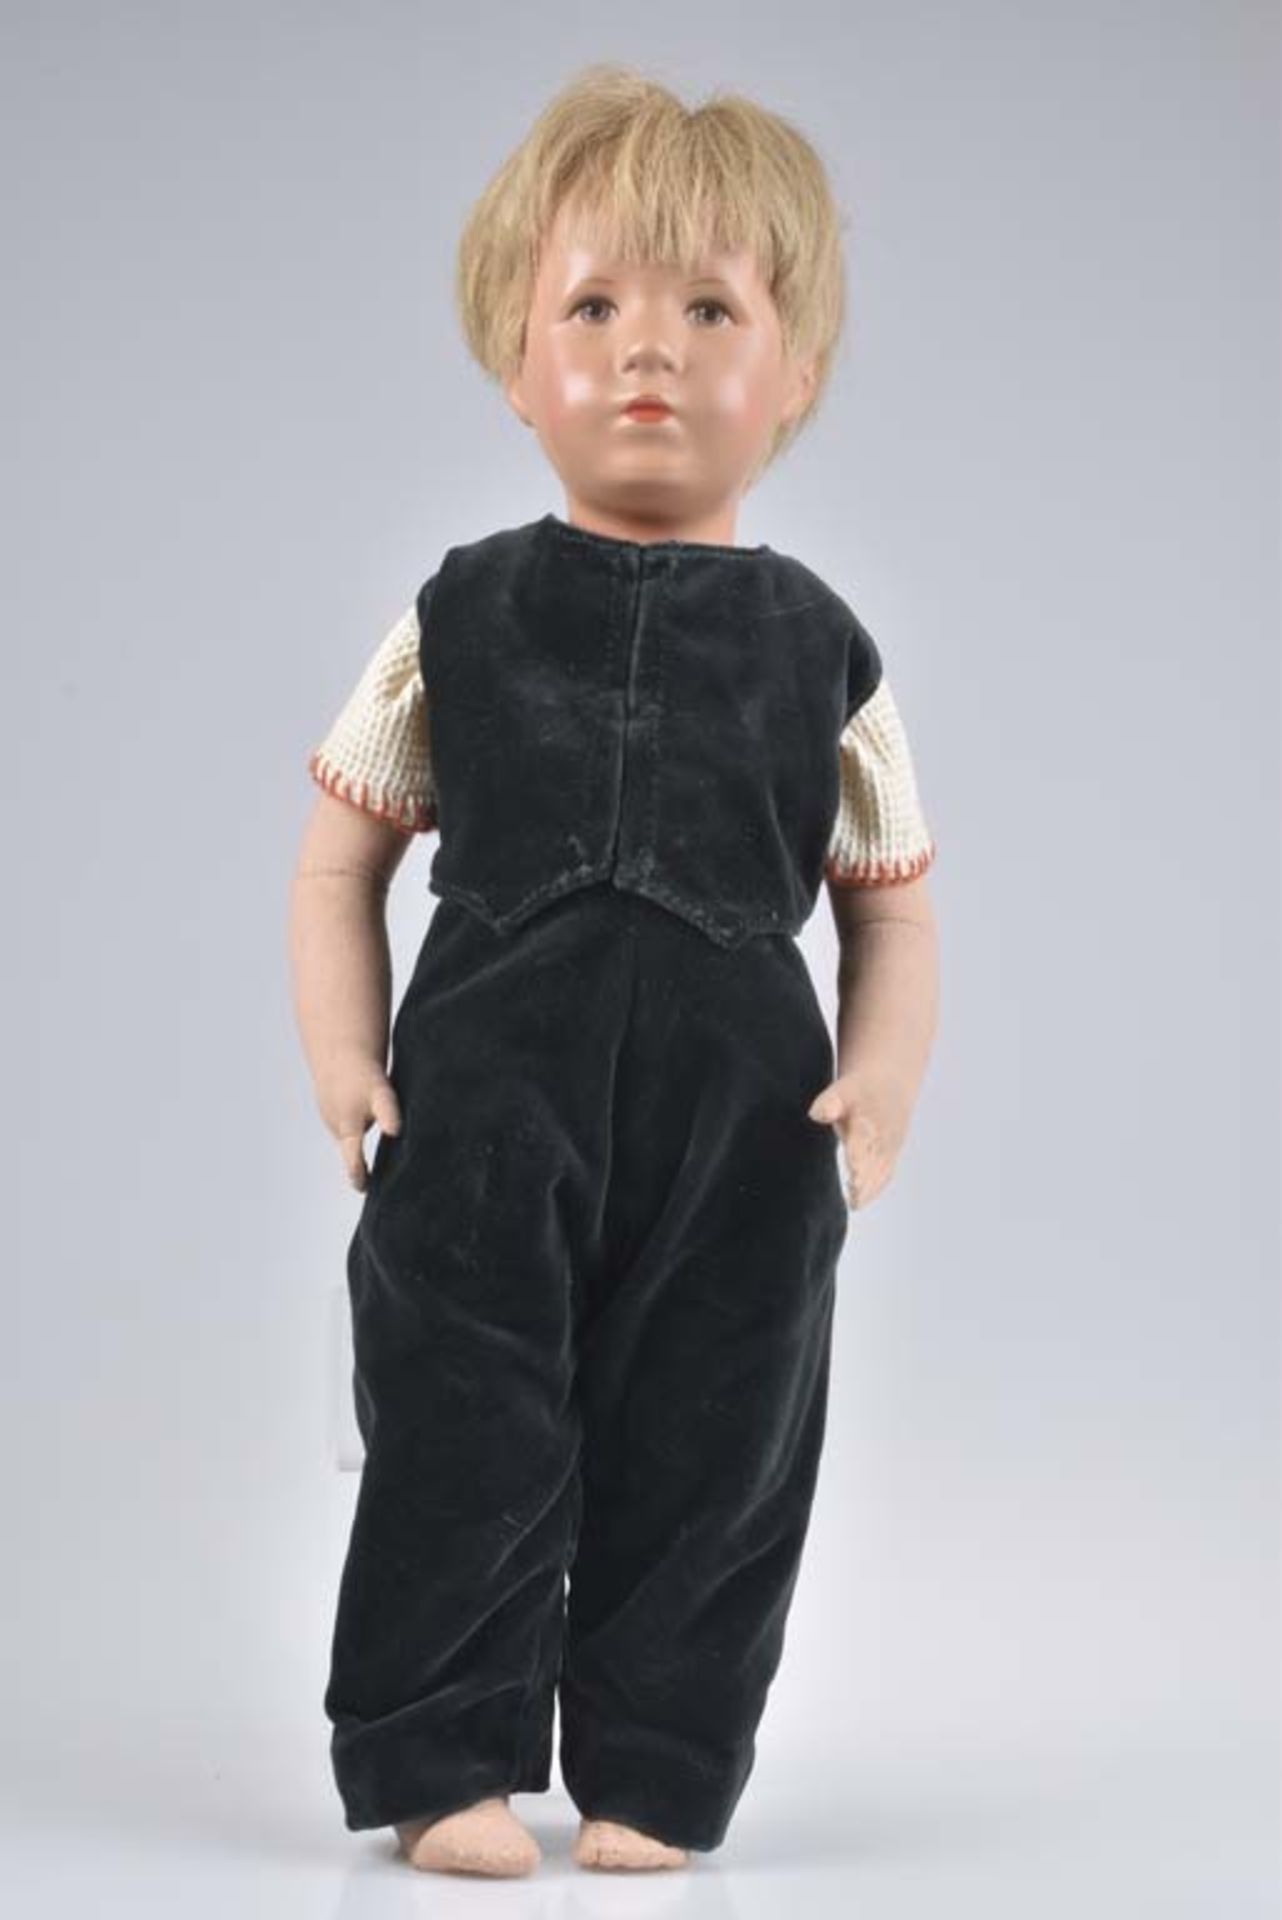 KÄTHE KRUSE Puppe Junge, 1960er Jahre, Kunststoffkopf, dunkelblonde Echthaare, gem. g